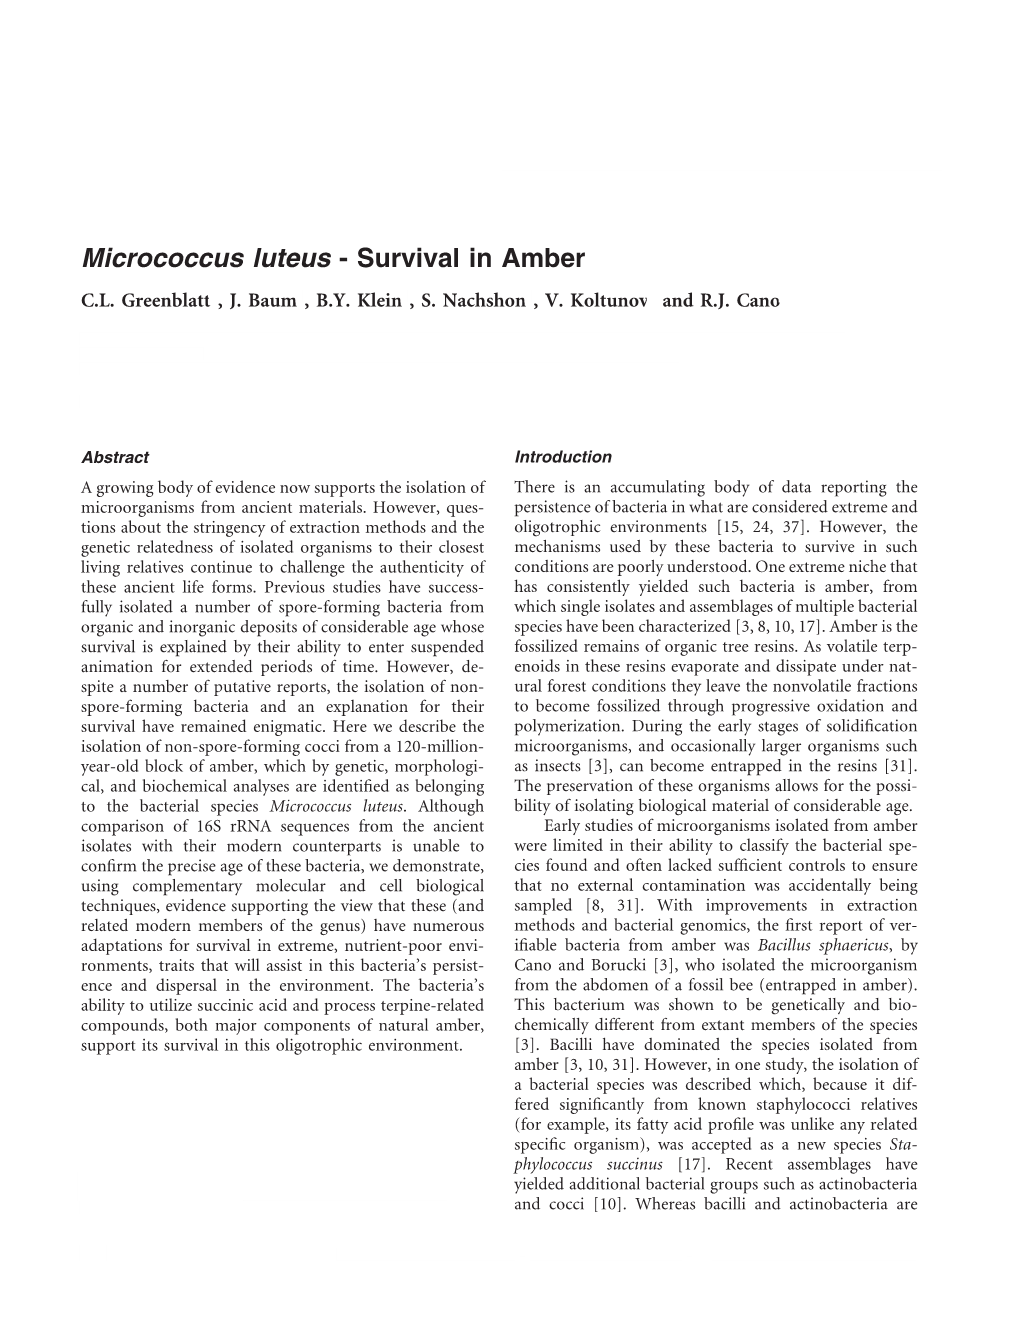 Micrococcus Luteus - Survival in Amber C.L